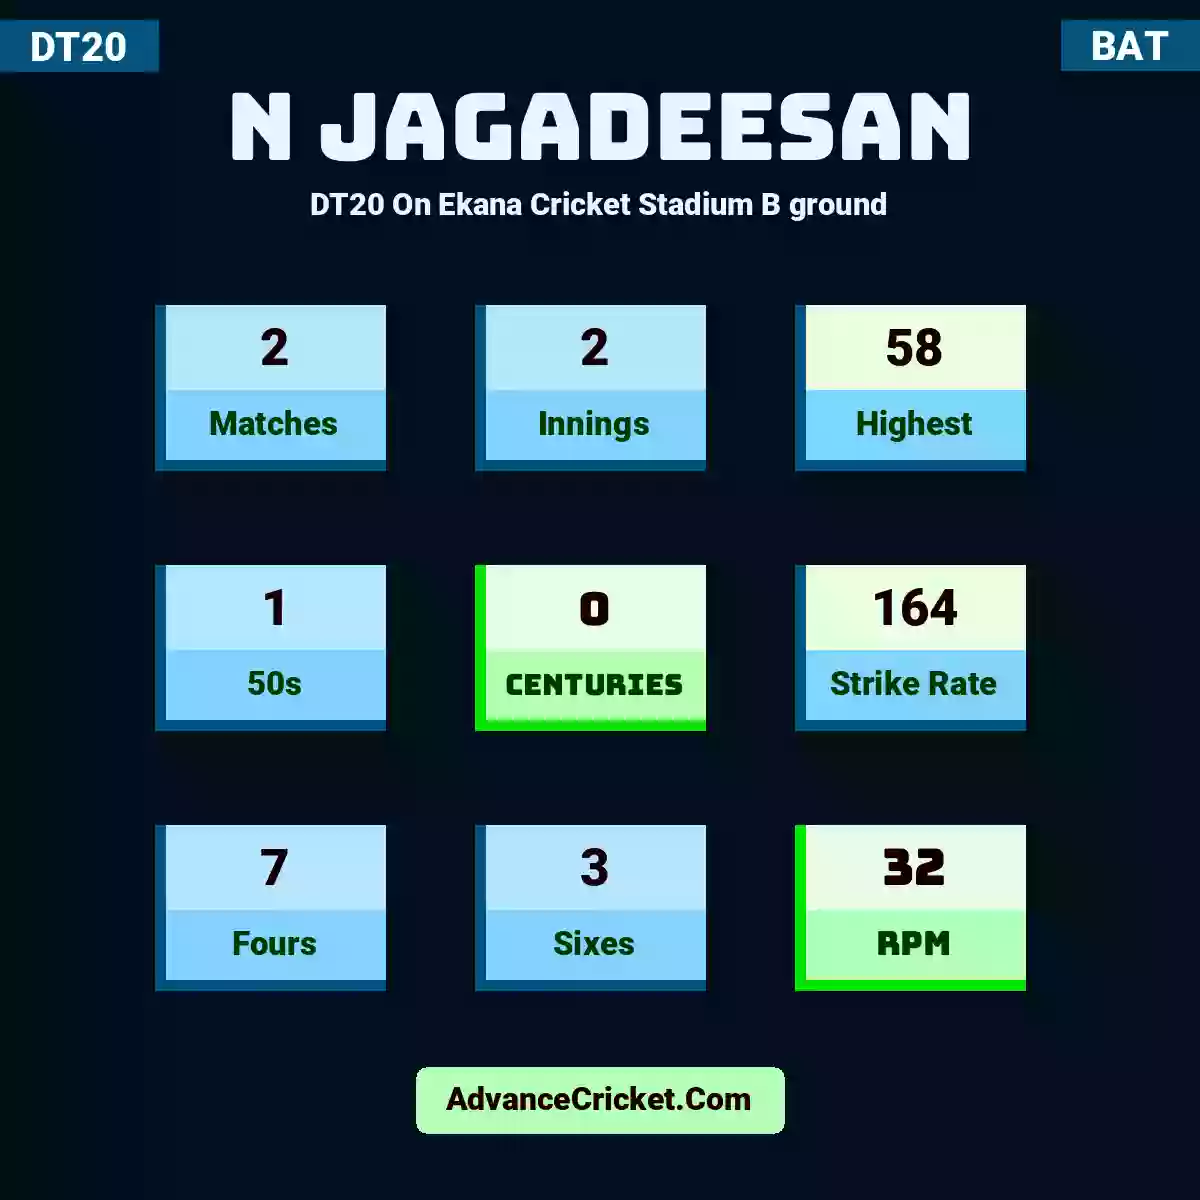 N Jagadeesan DT20  On Ekana Cricket Stadium B ground, N Jagadeesan played 2 matches, scored 58 runs as highest, 1 half-centuries, and 0 centuries, with a strike rate of 164. N.Jagadeesan hit 7 fours and 3 sixes, with an RPM of 32.